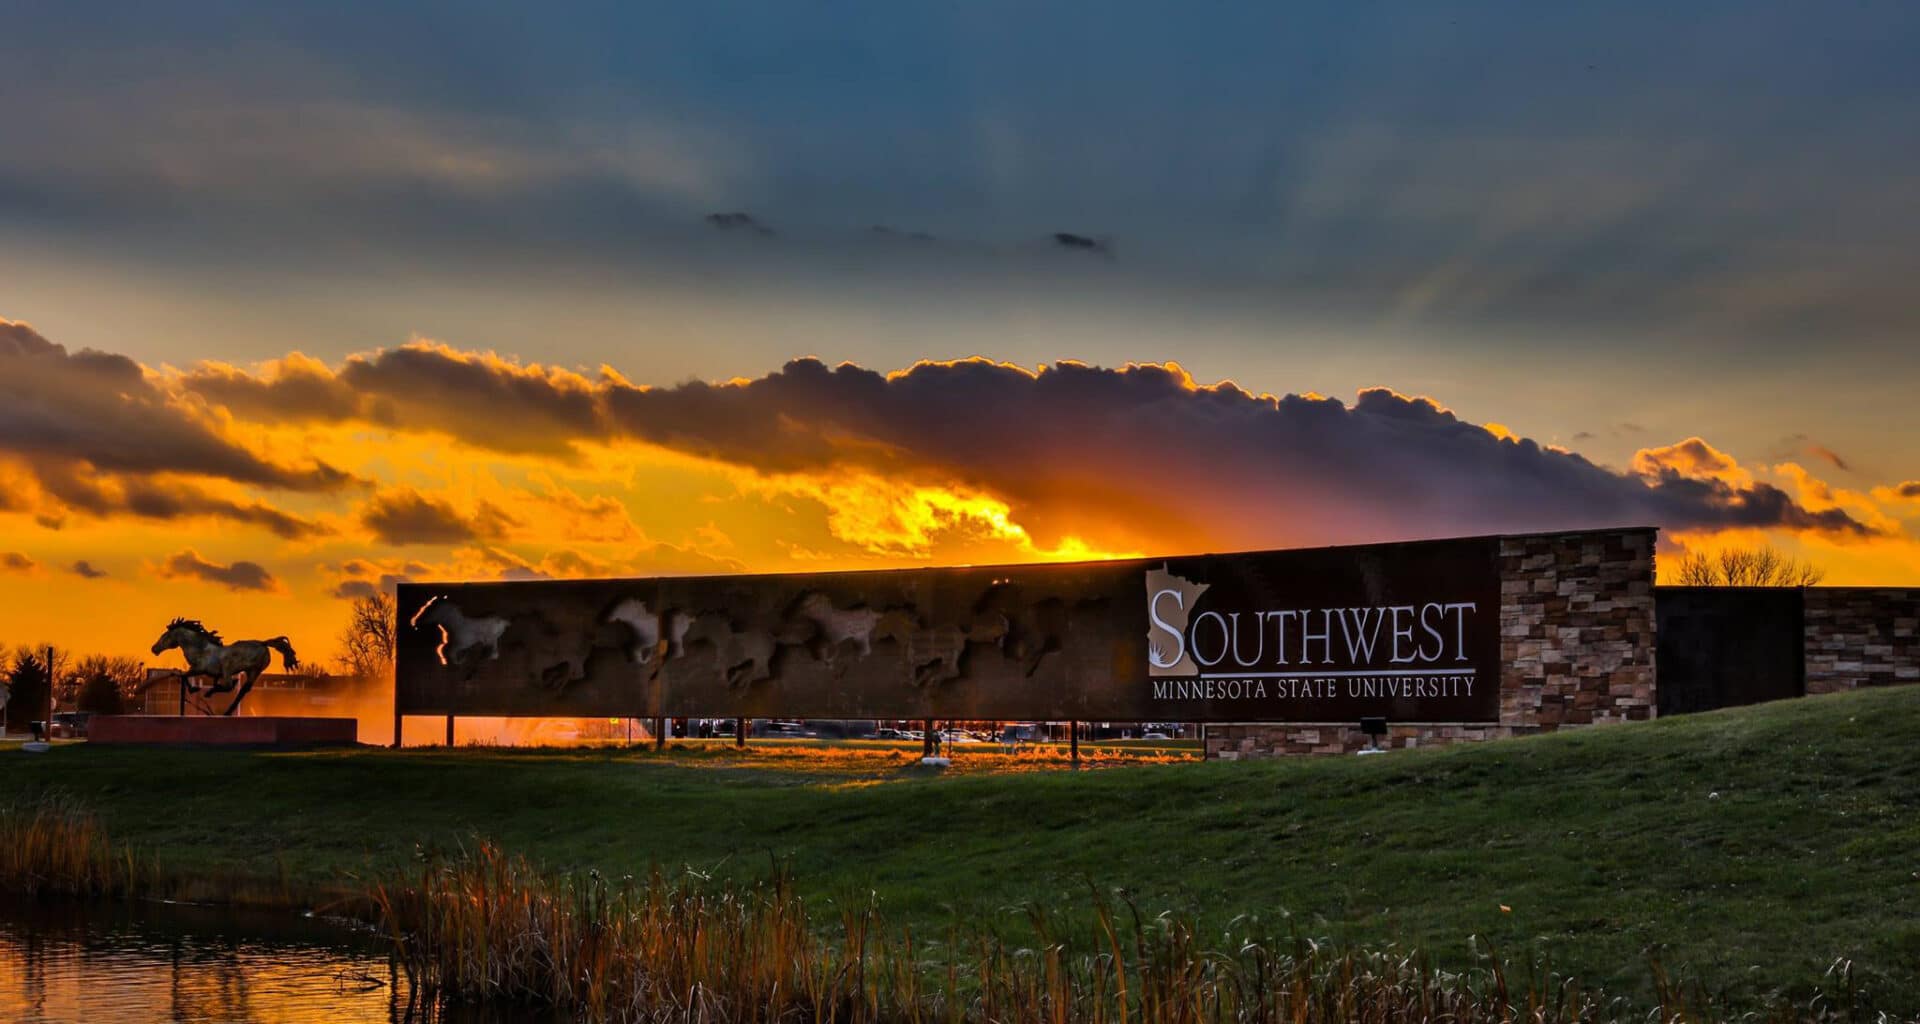 Southwest Minnesota State University sign